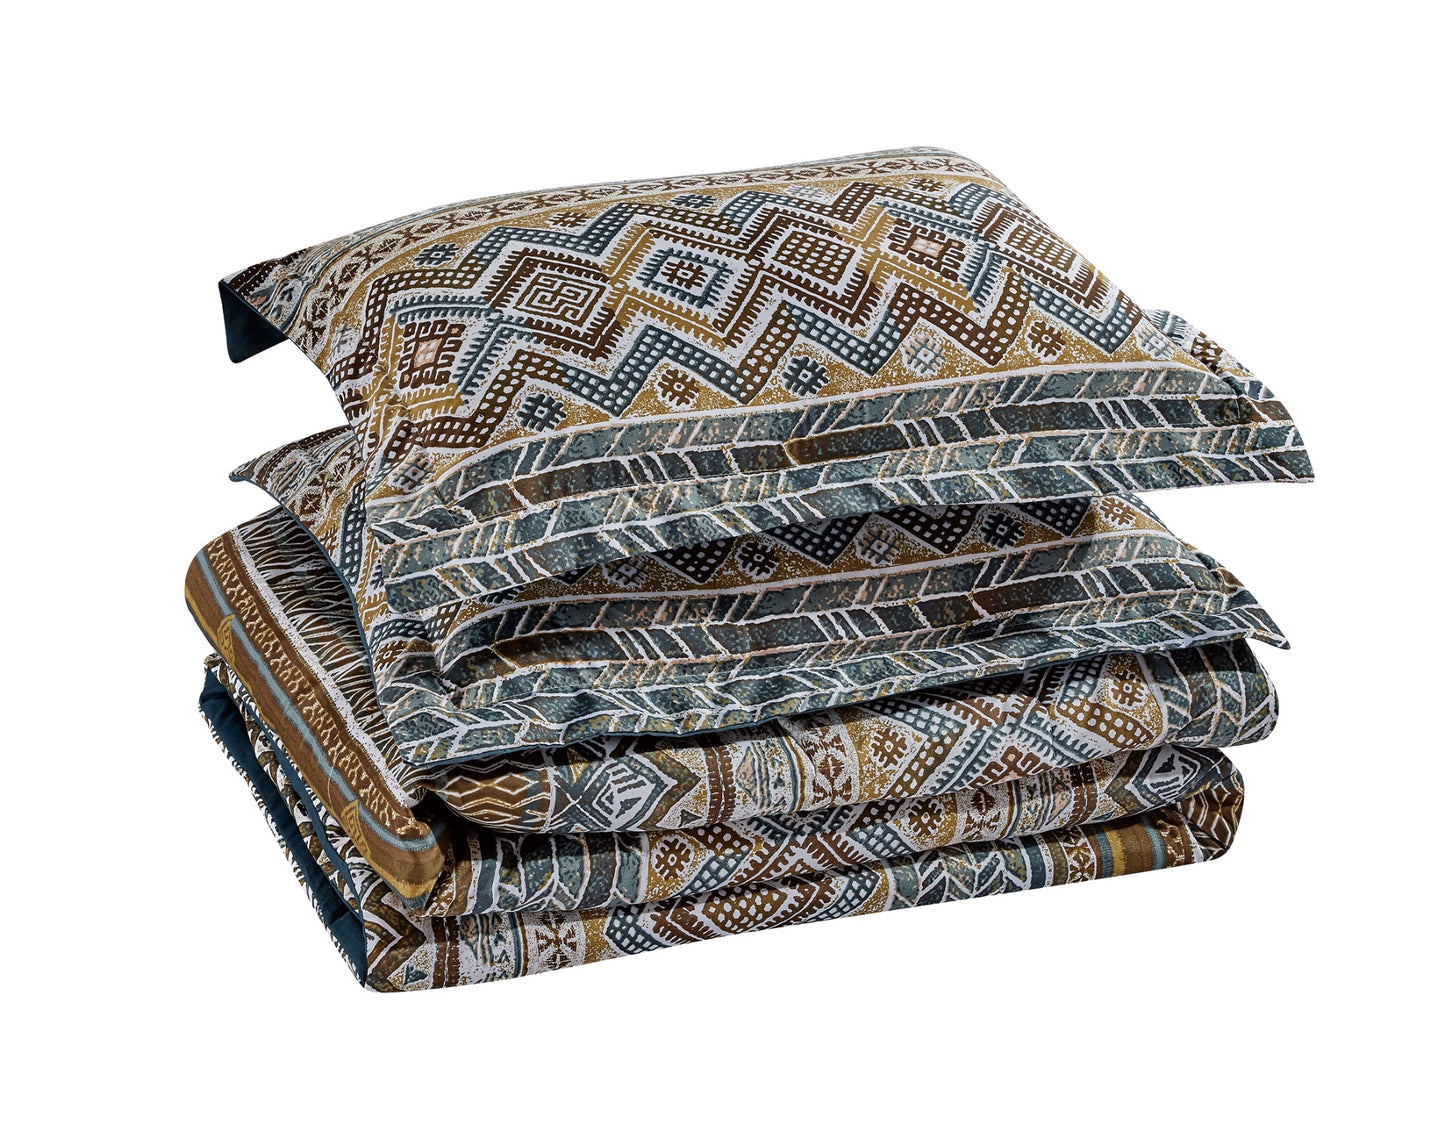 Lodge Style 3-Piece Microfiber Comforter Set